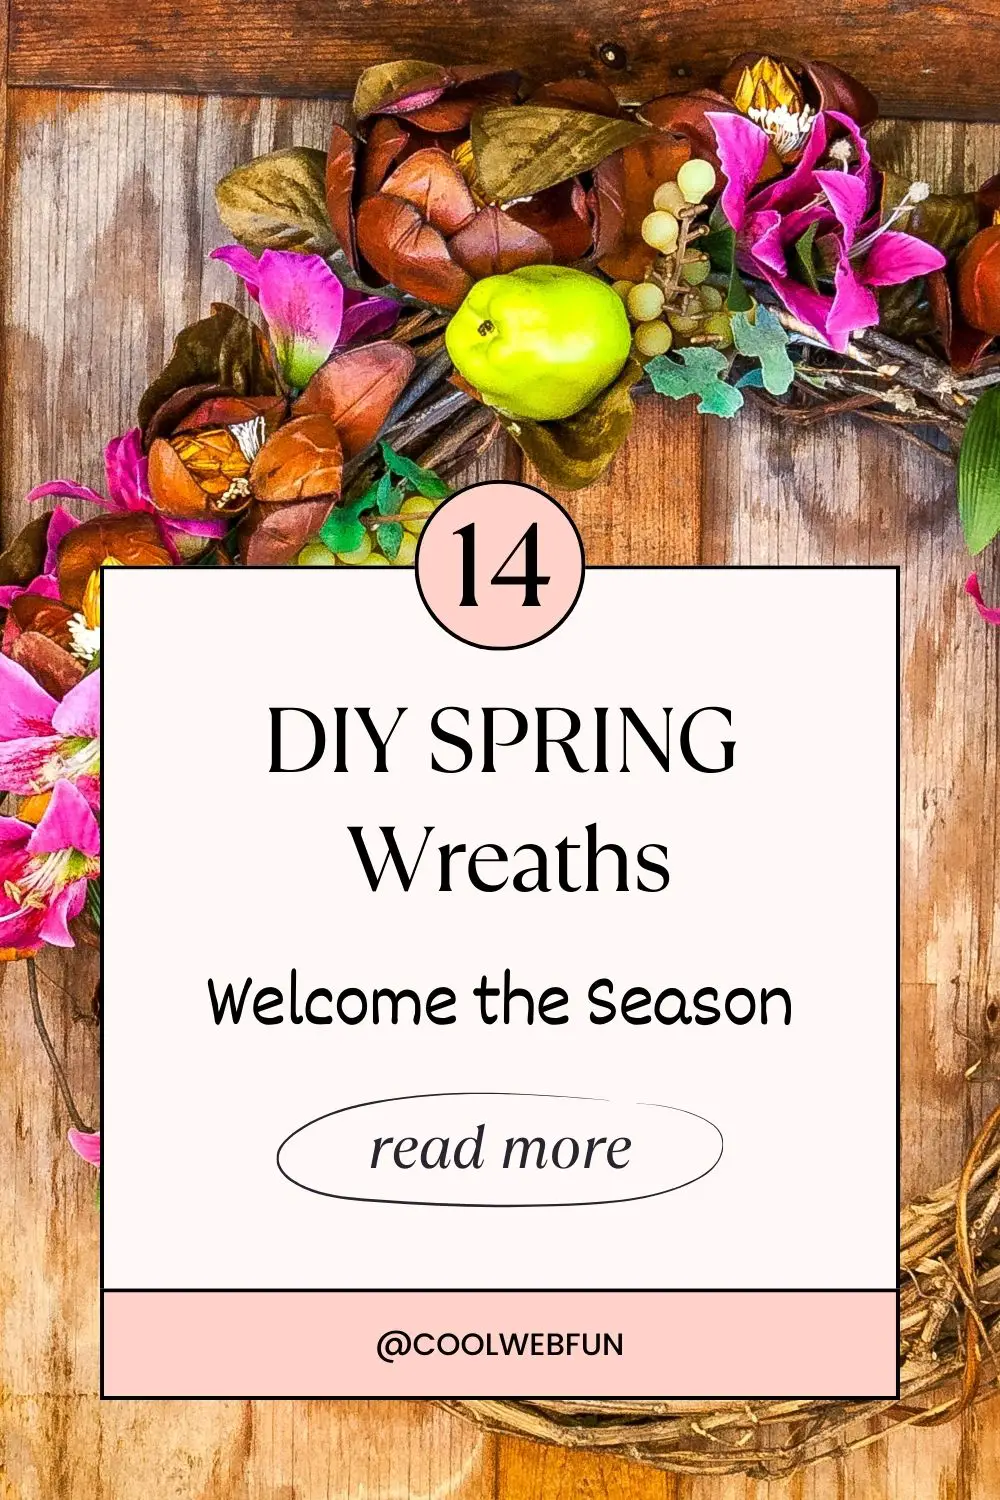 DIY Spring wreaths